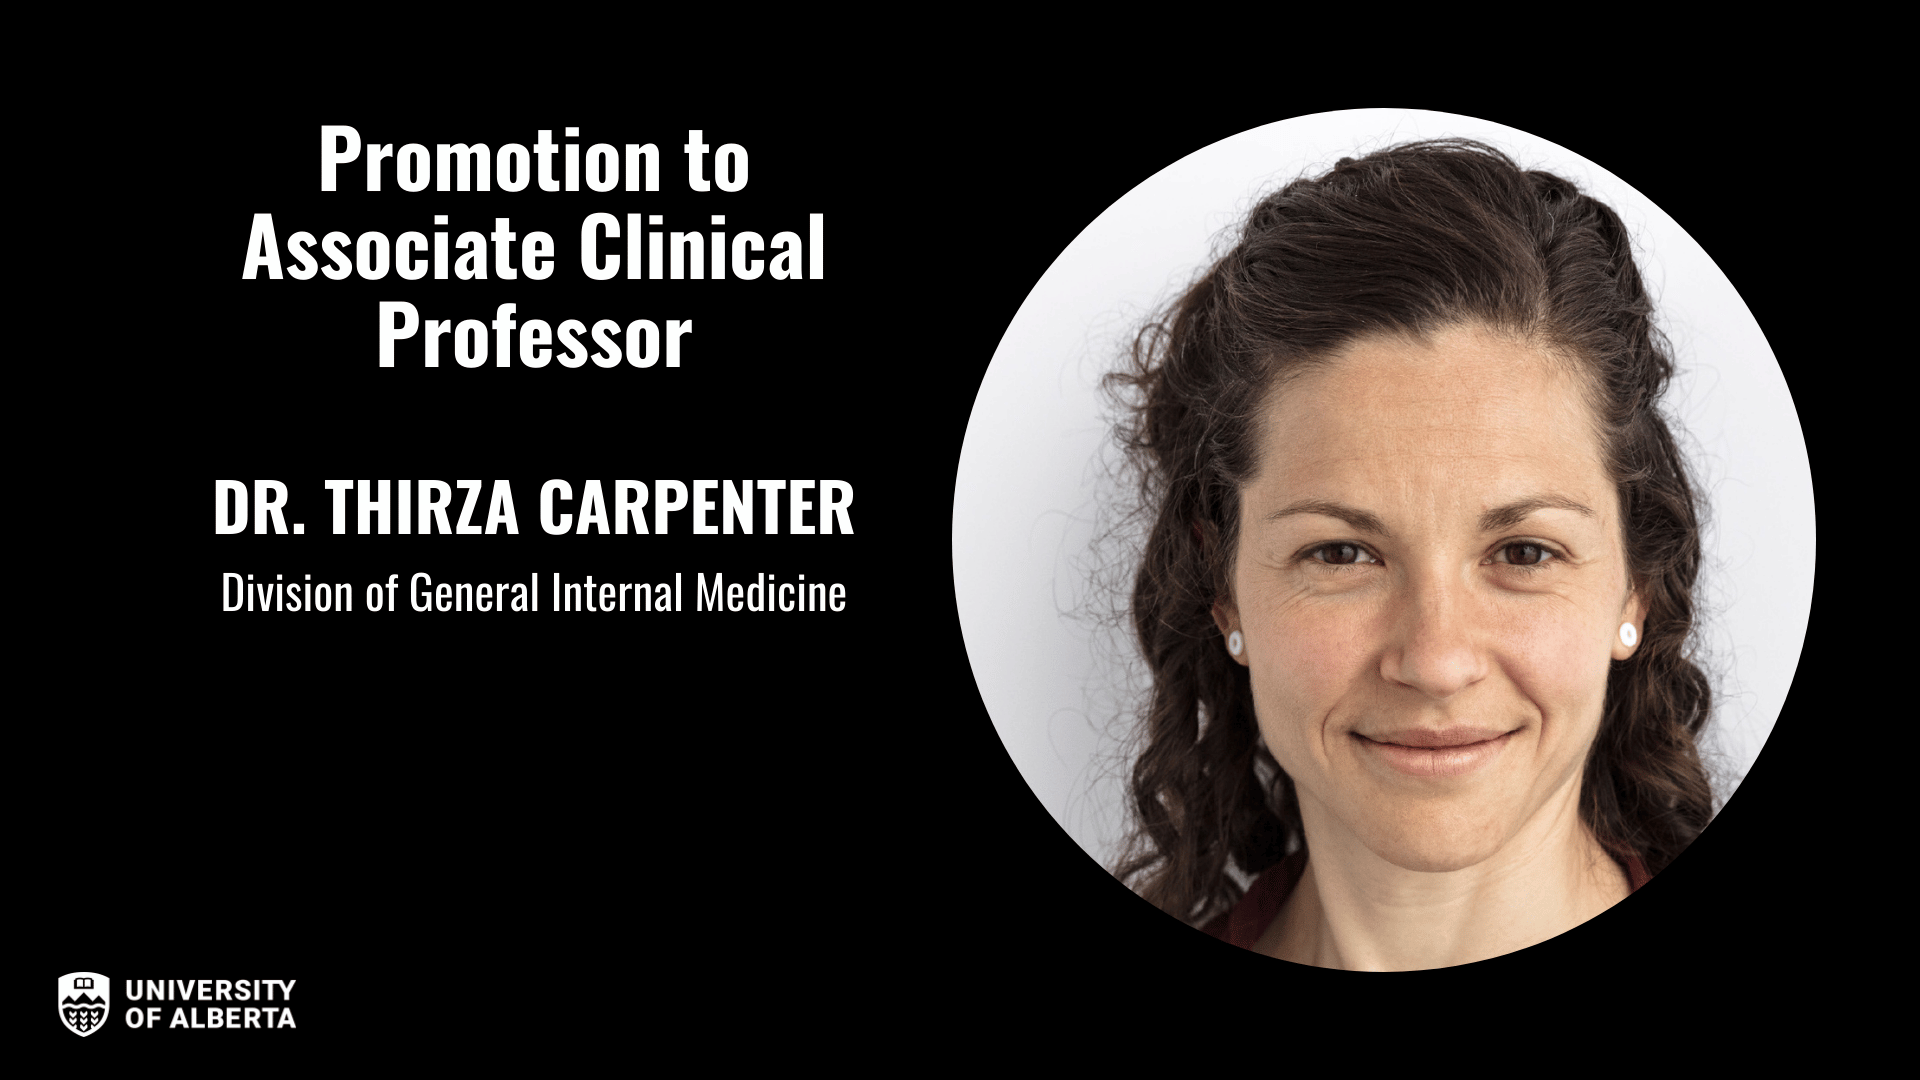 Dr. Thirza Carpenter